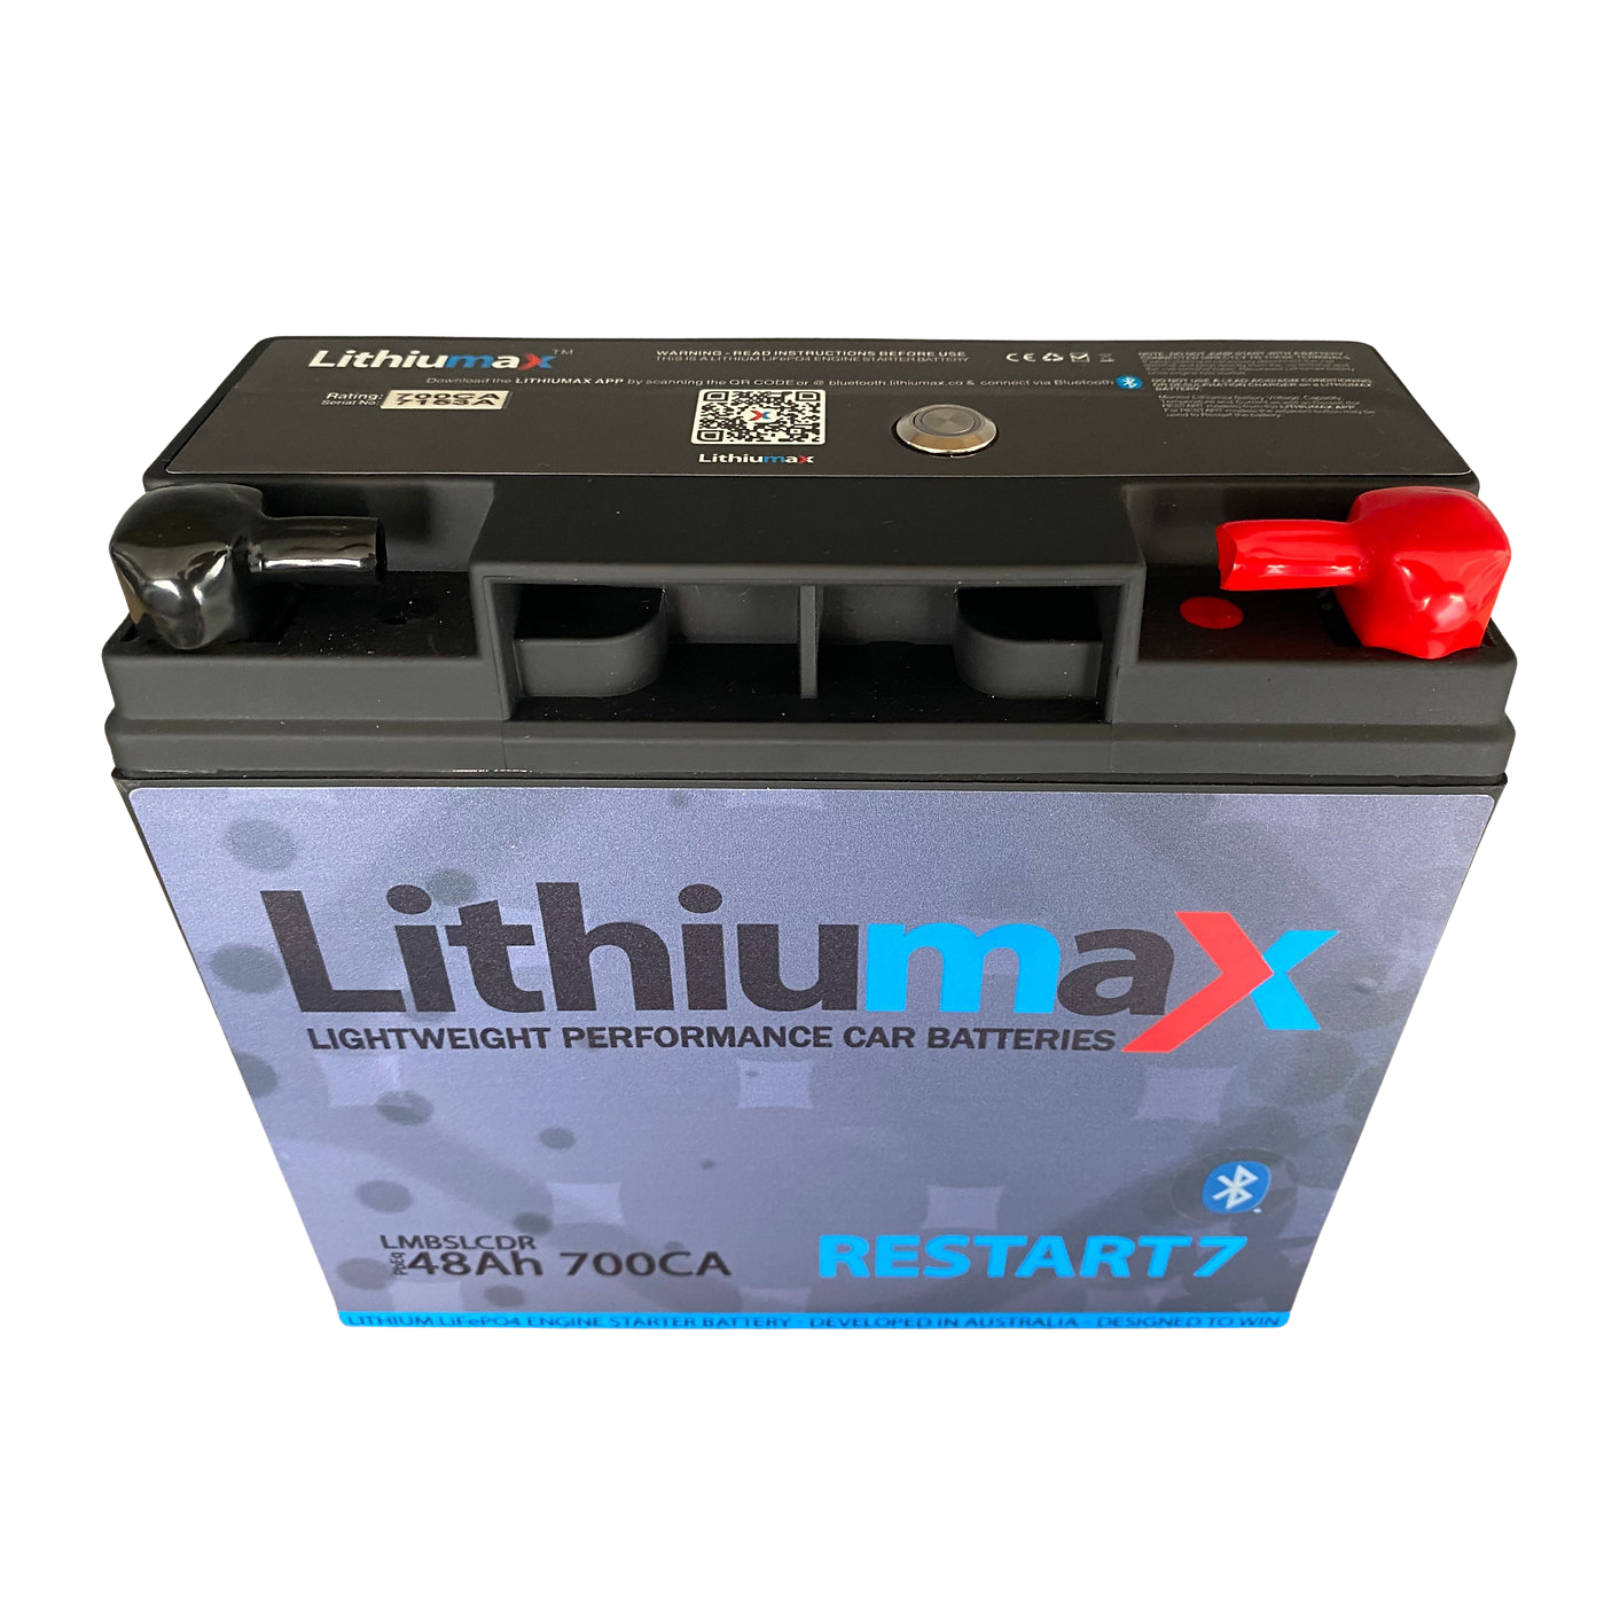 Lithiumax RESTART7 Bluetooth 700CA ULTRA-LITE Engine Battery